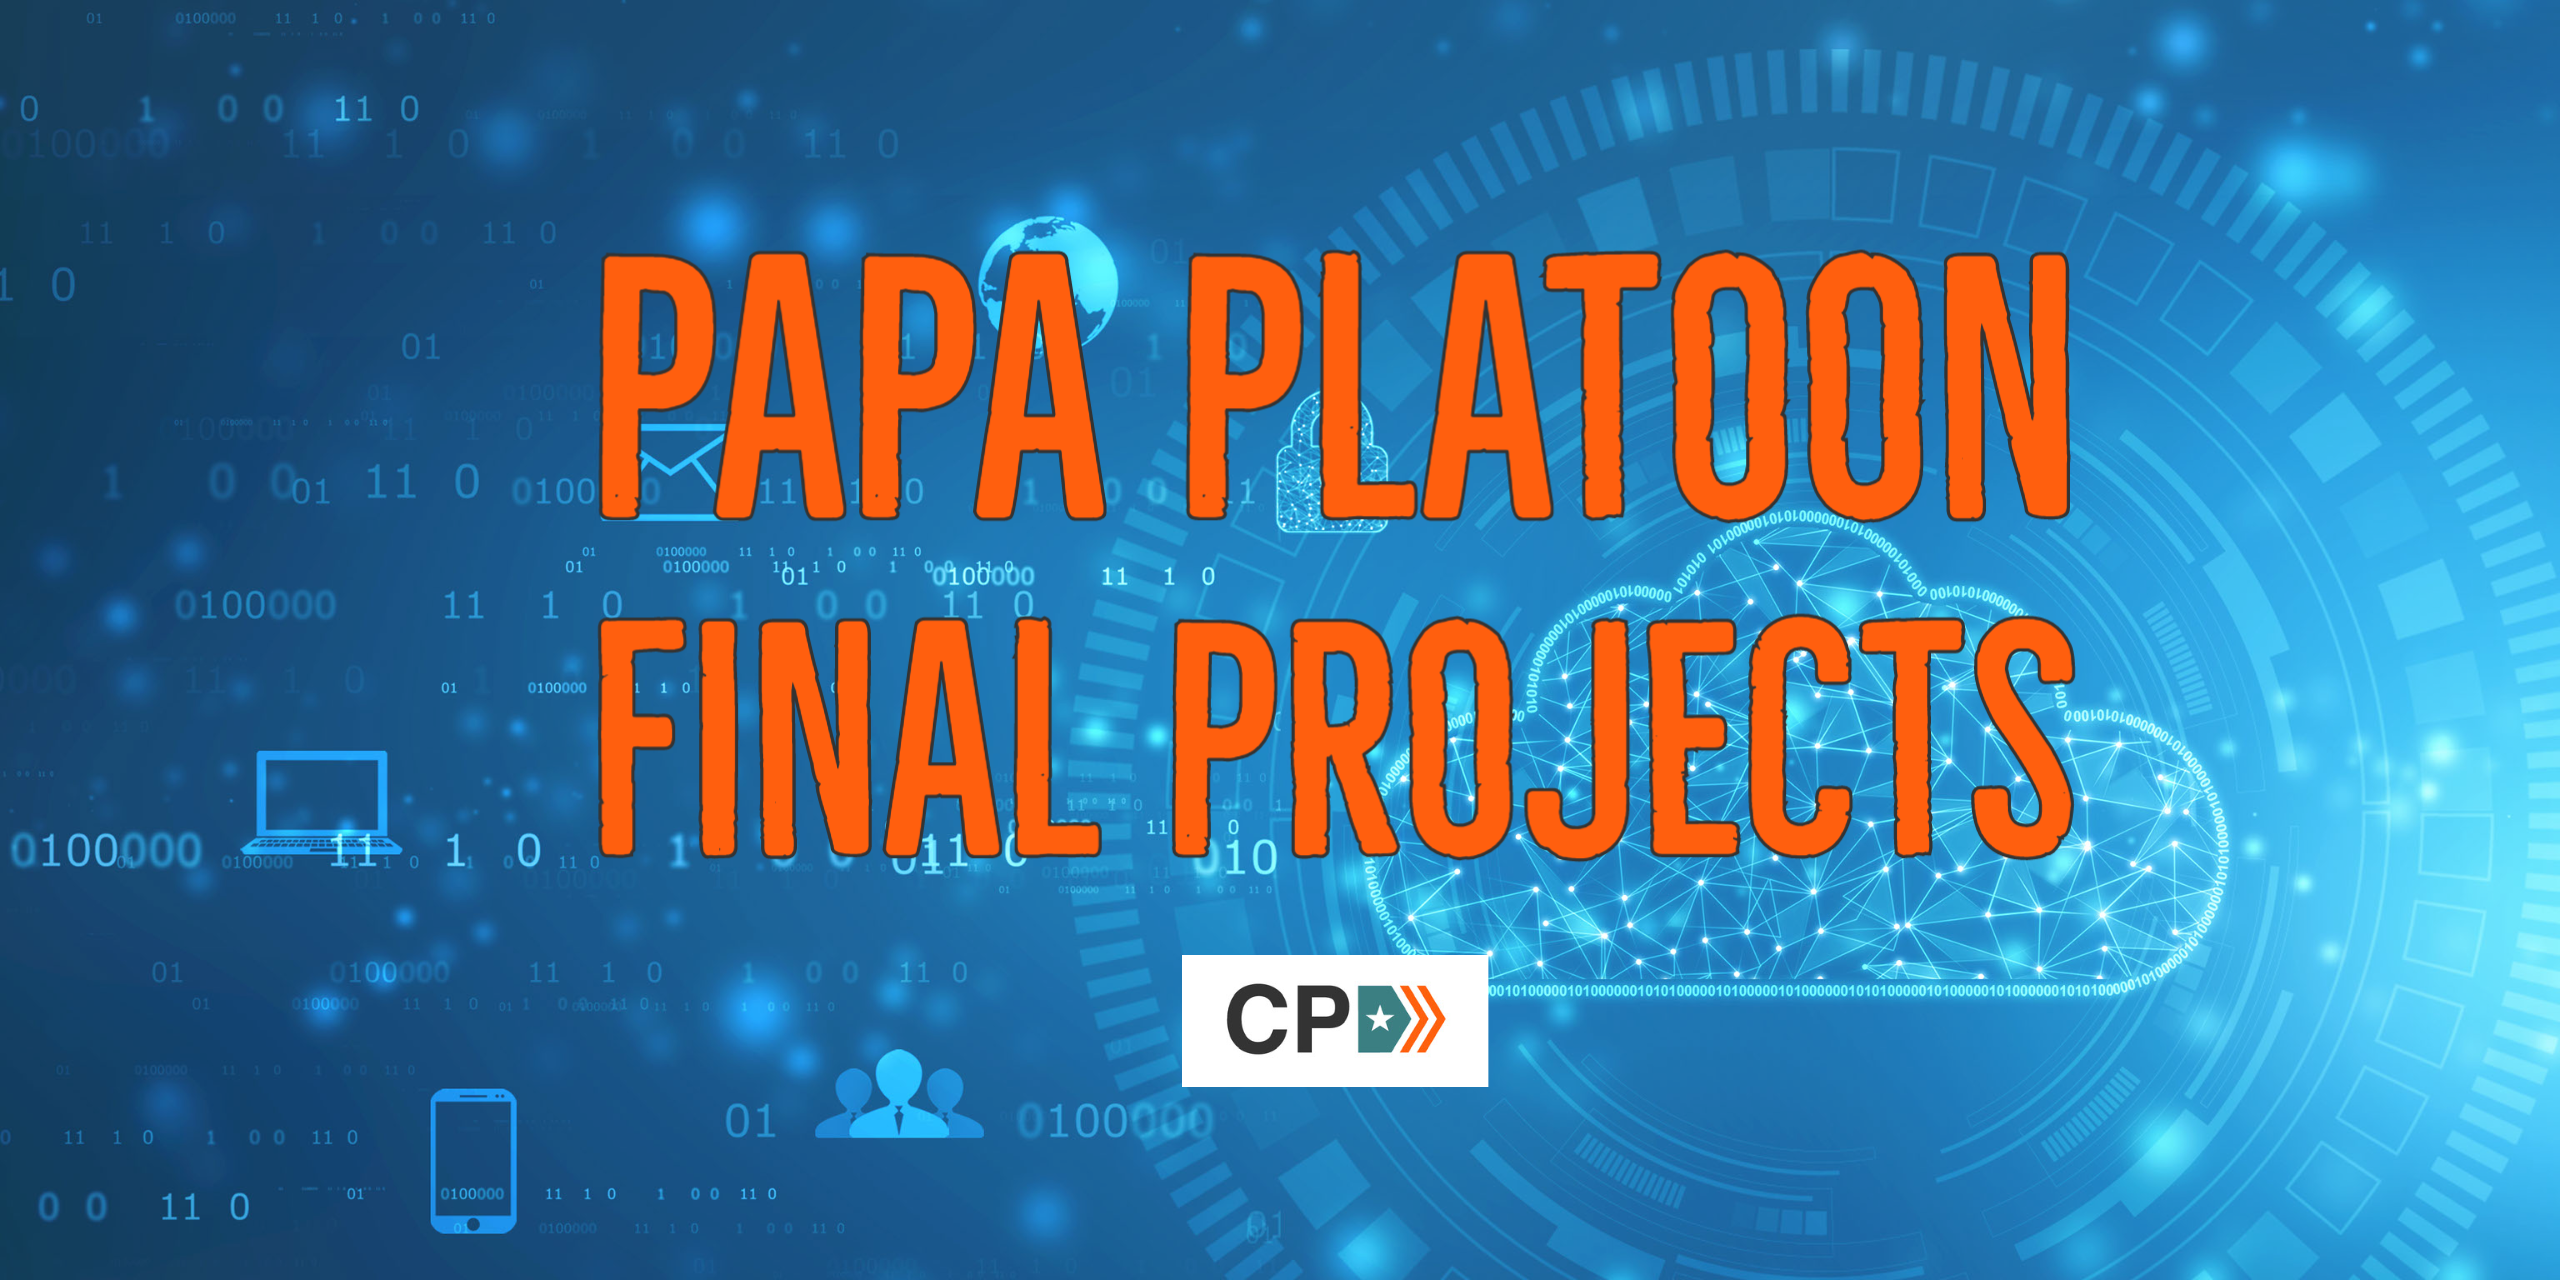 Papa Platoon Final Projects